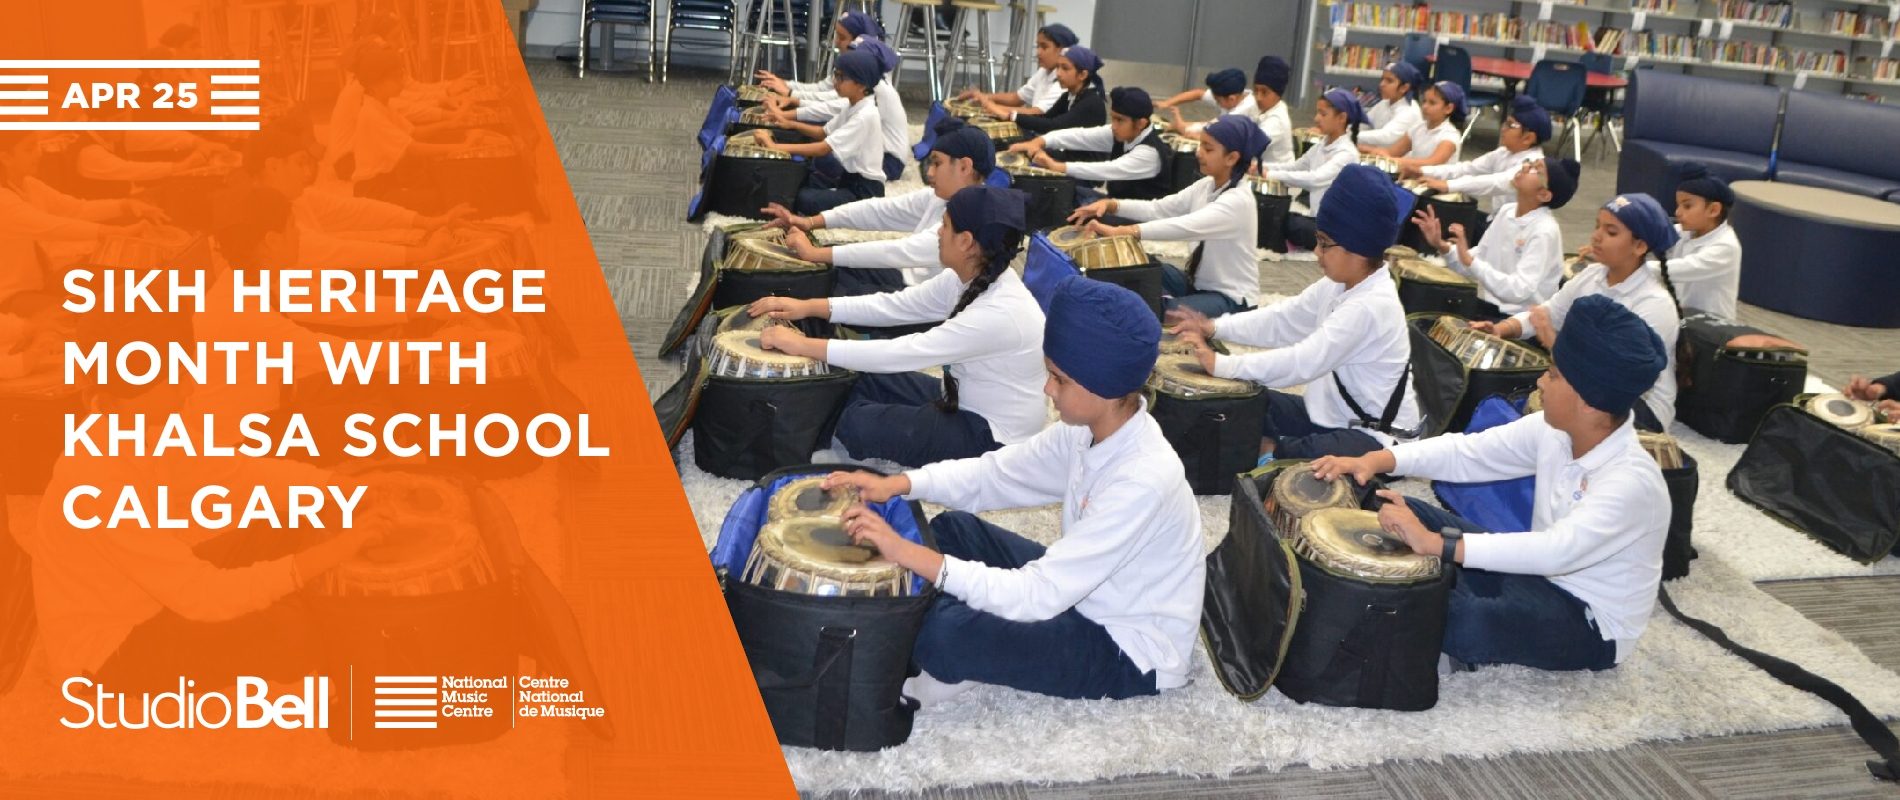 Sikh Heritage Month with Khalsa School Calgary